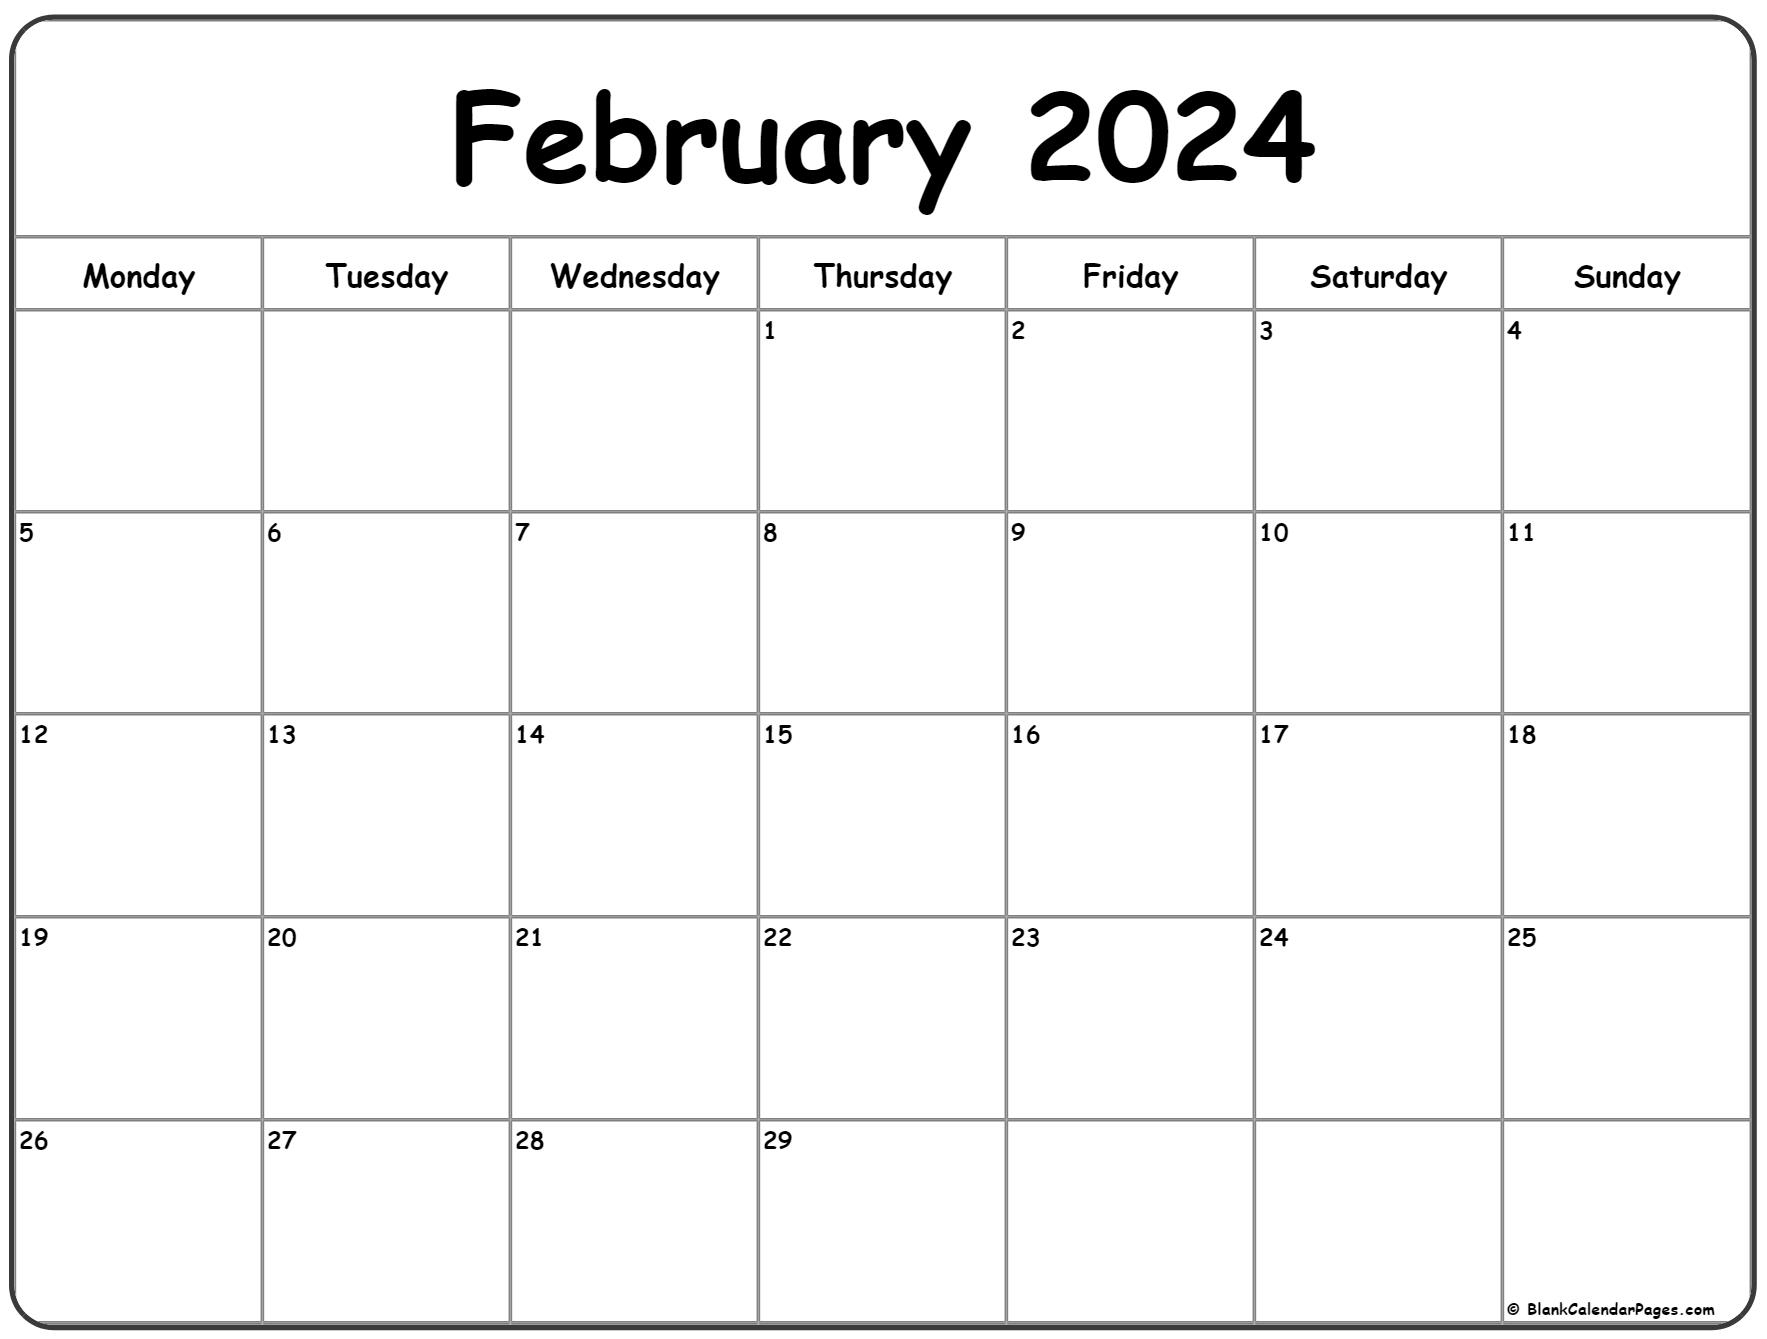 February 2024 Monday Calendar | Monday To Sunday for Blank February 2024 Calendar Printable